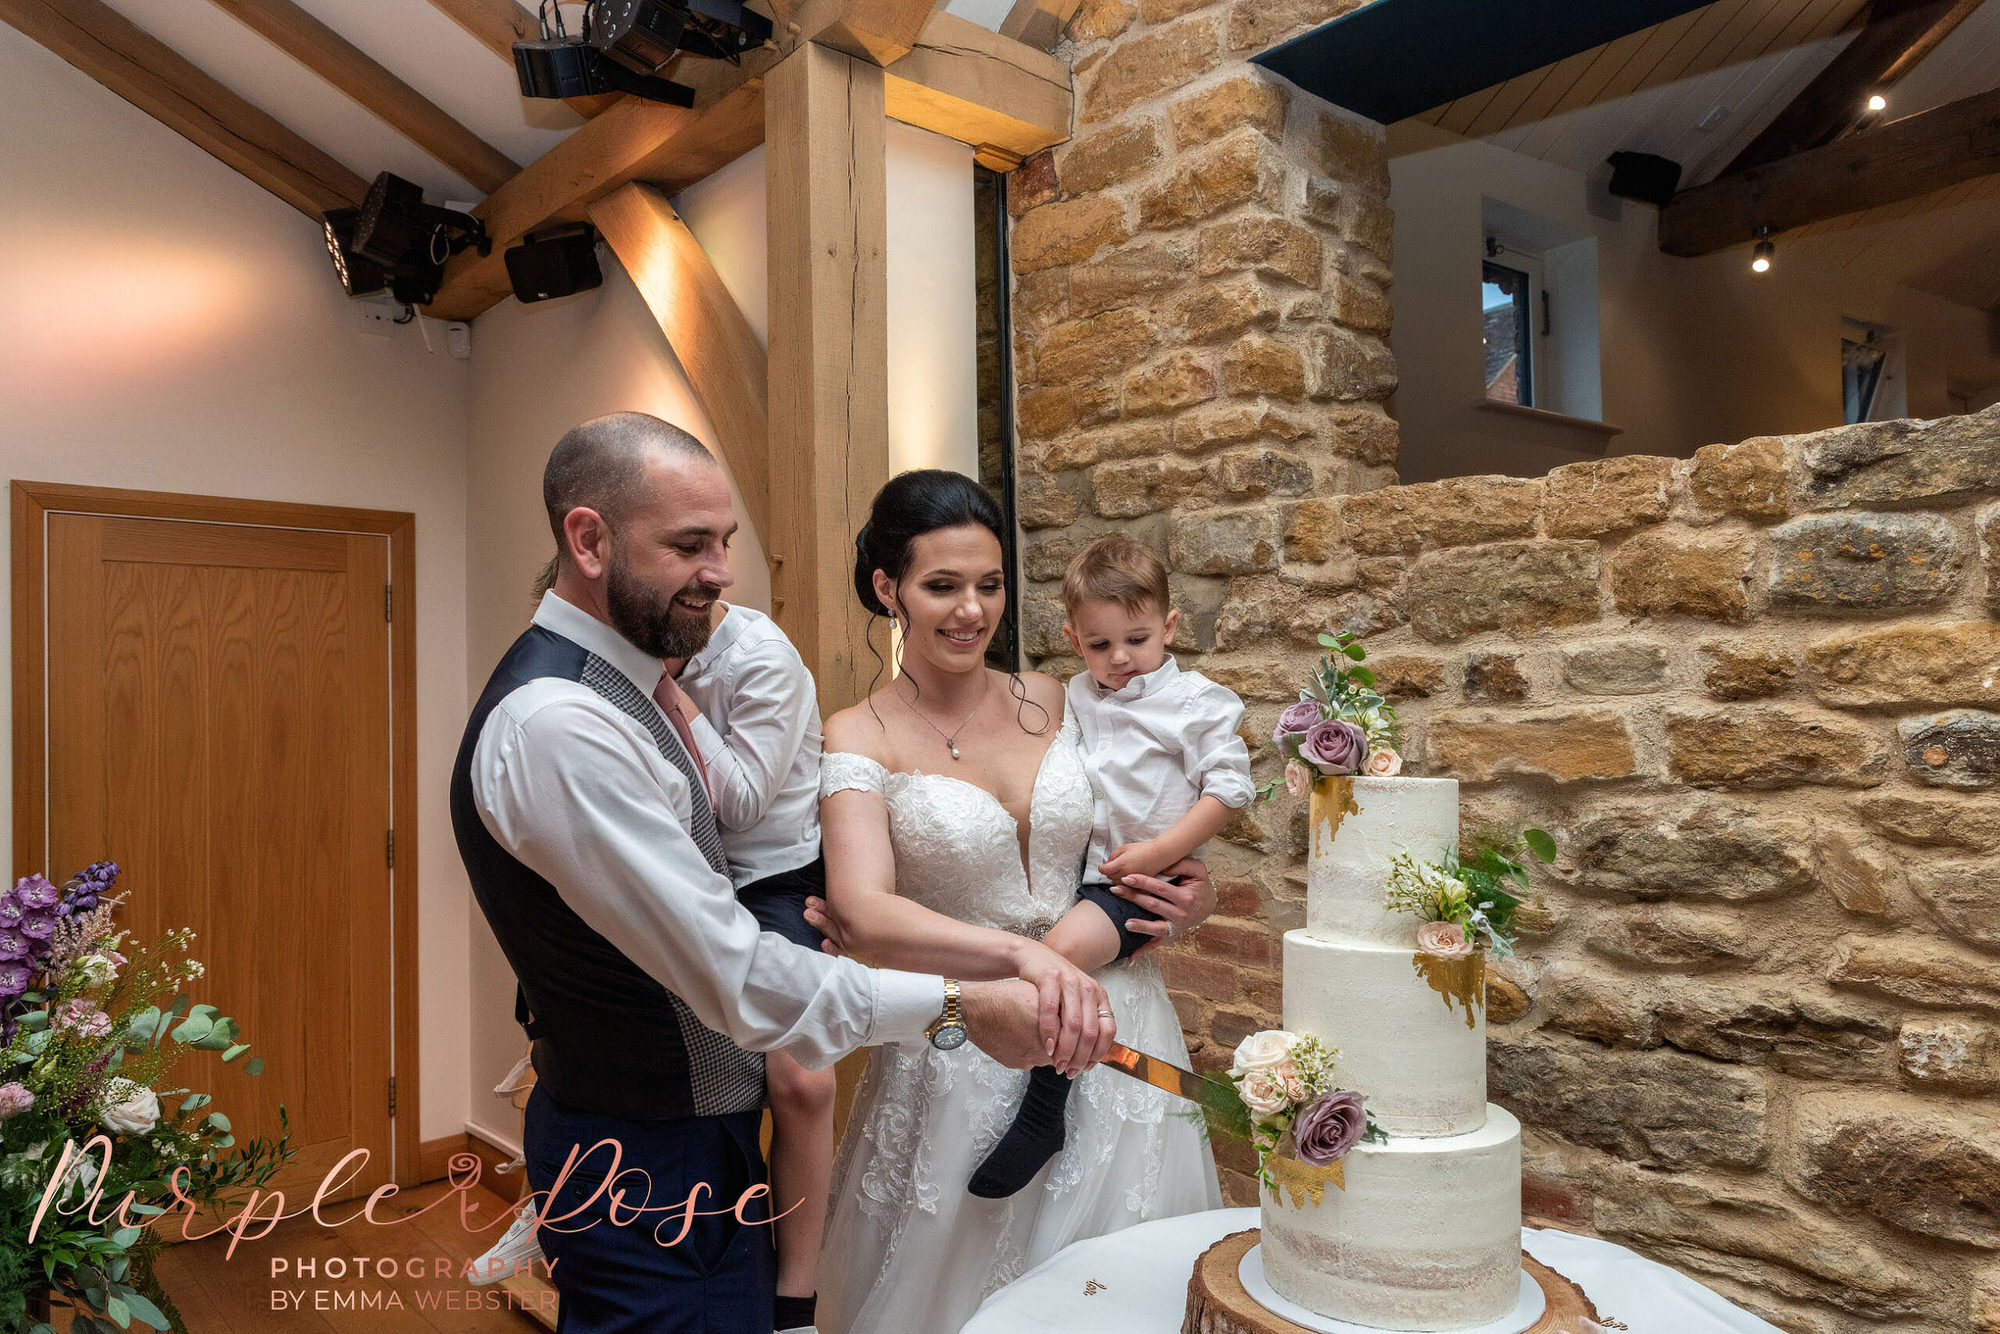 Bride, groom and their children cutting wedding cake